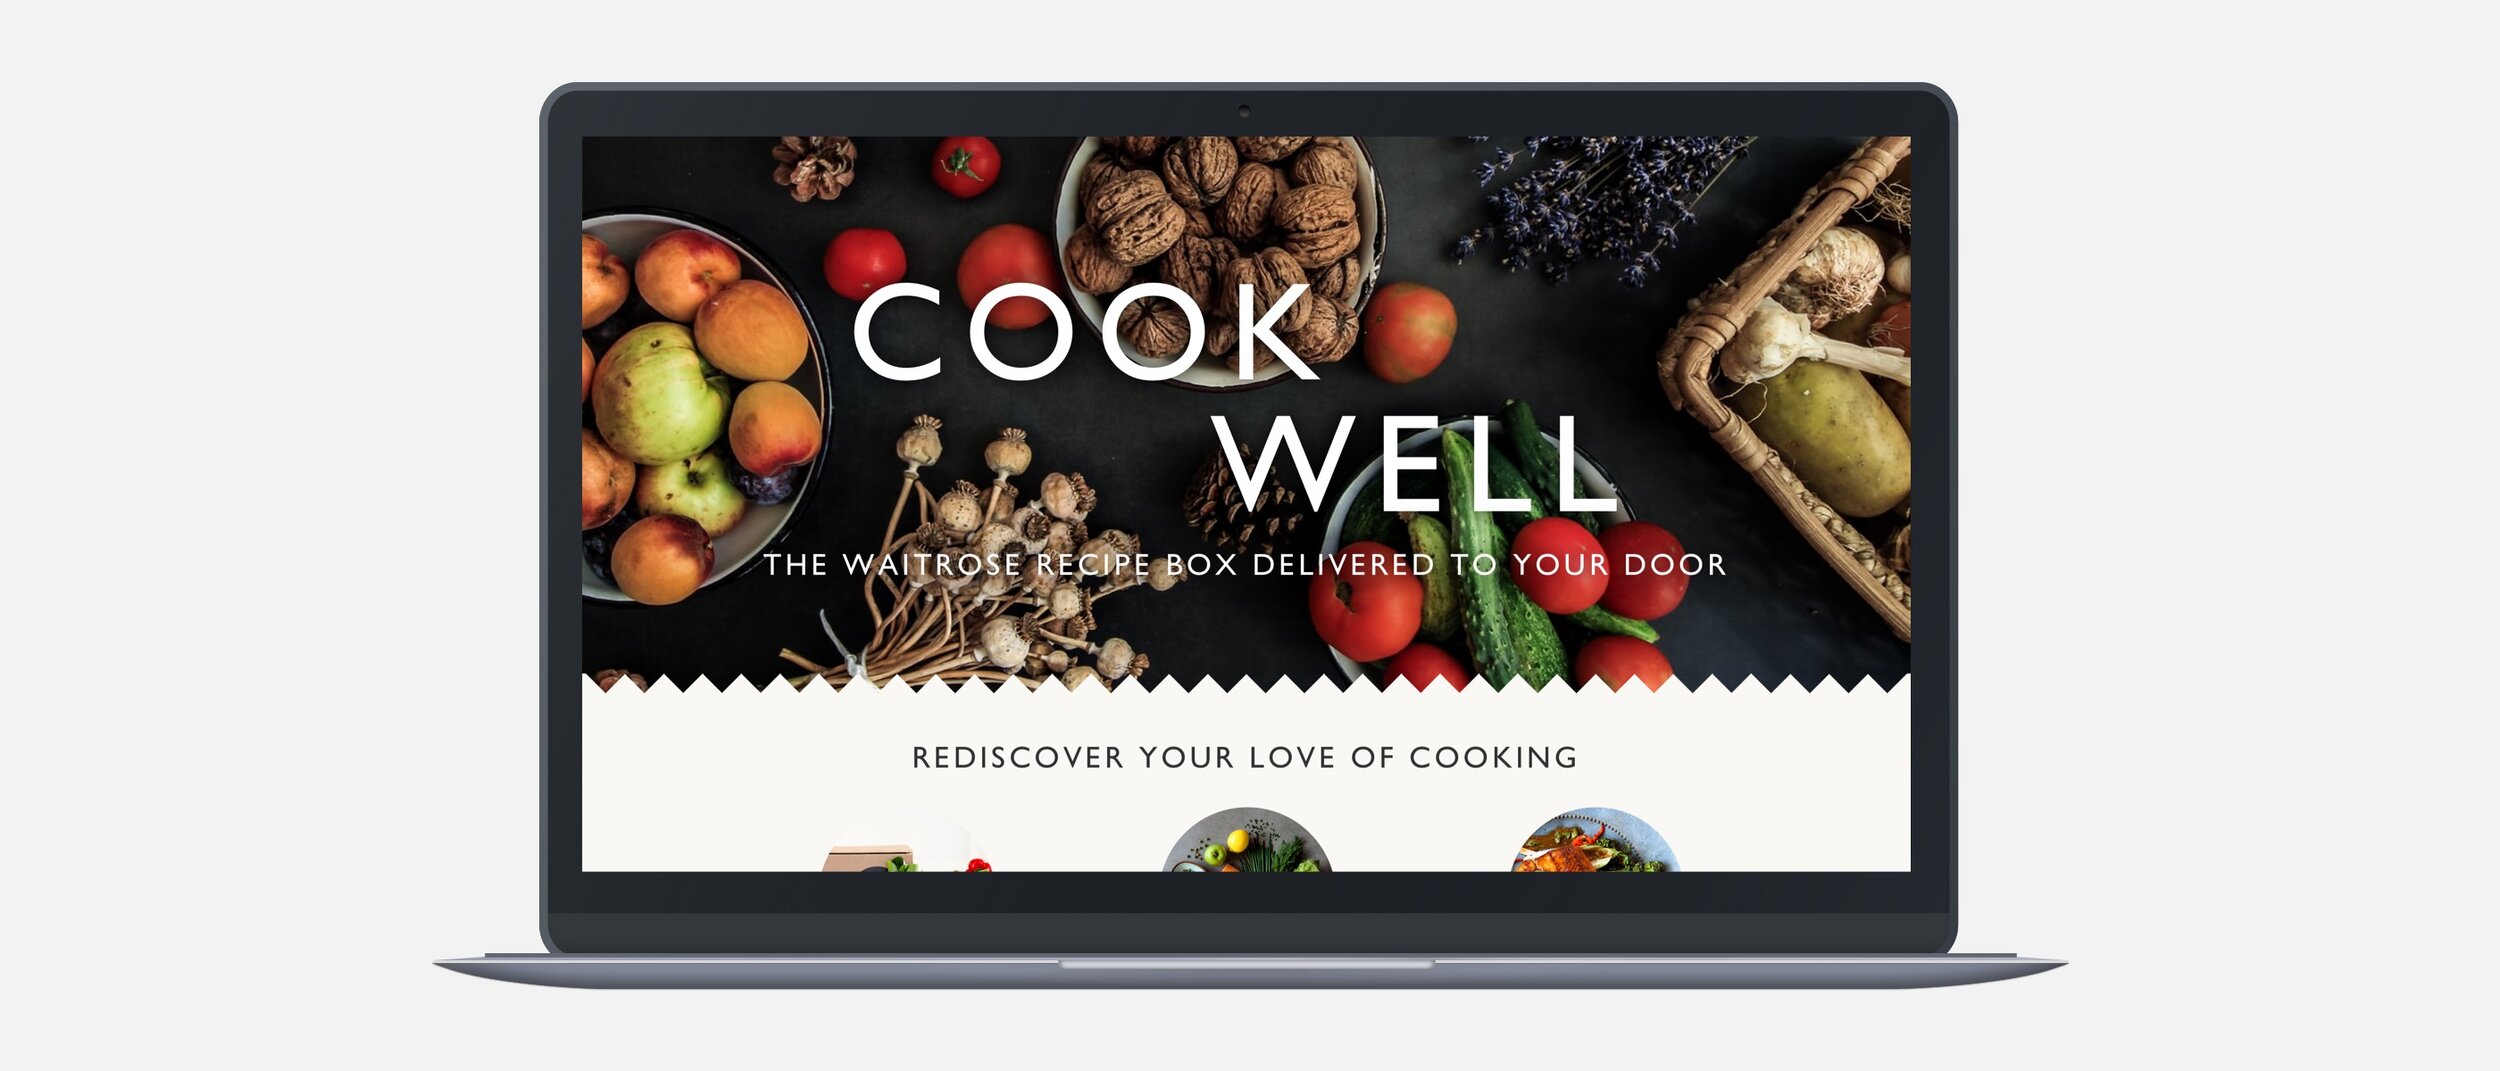 CookWell-homepage1 copy.jpg